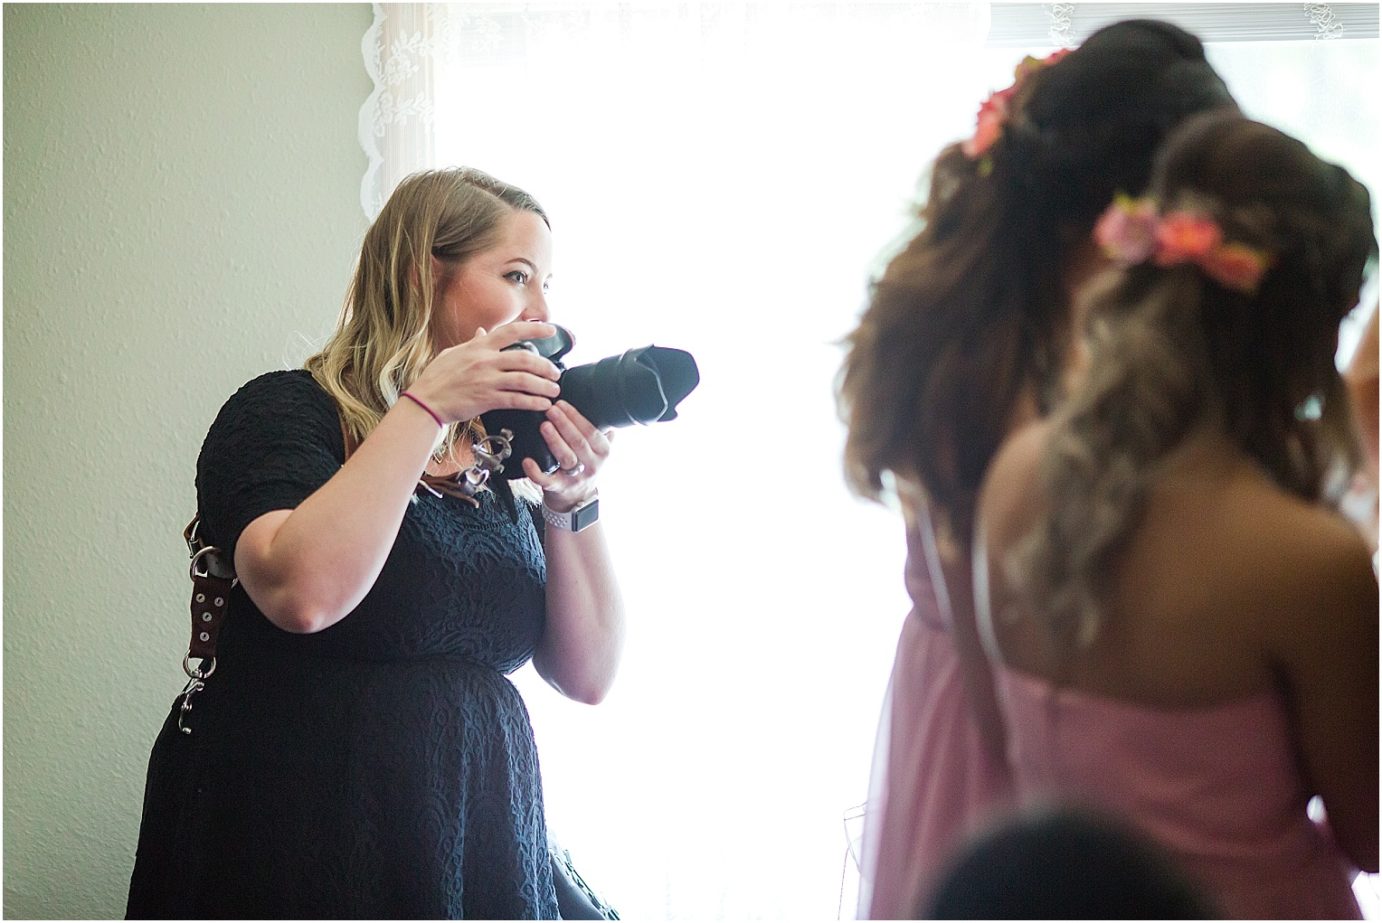 Behind the Scenes 2017 Misty C. Photography Wedding photographer